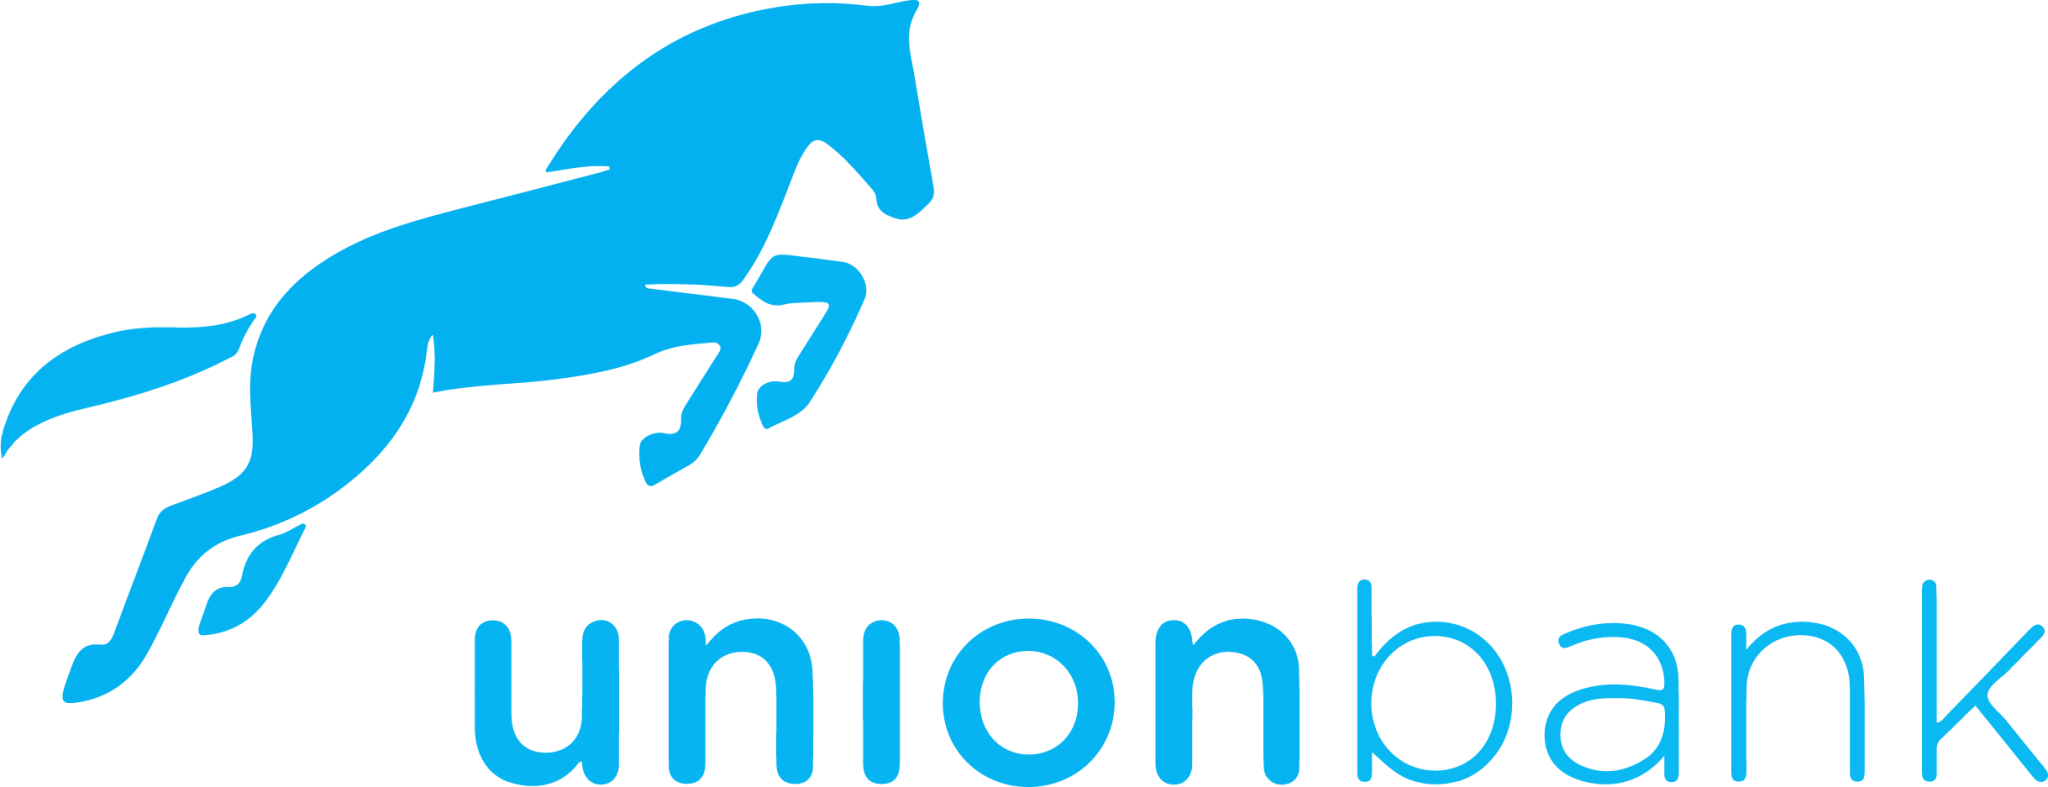 Union Bank Logo - Union Bank Nigeria Icon